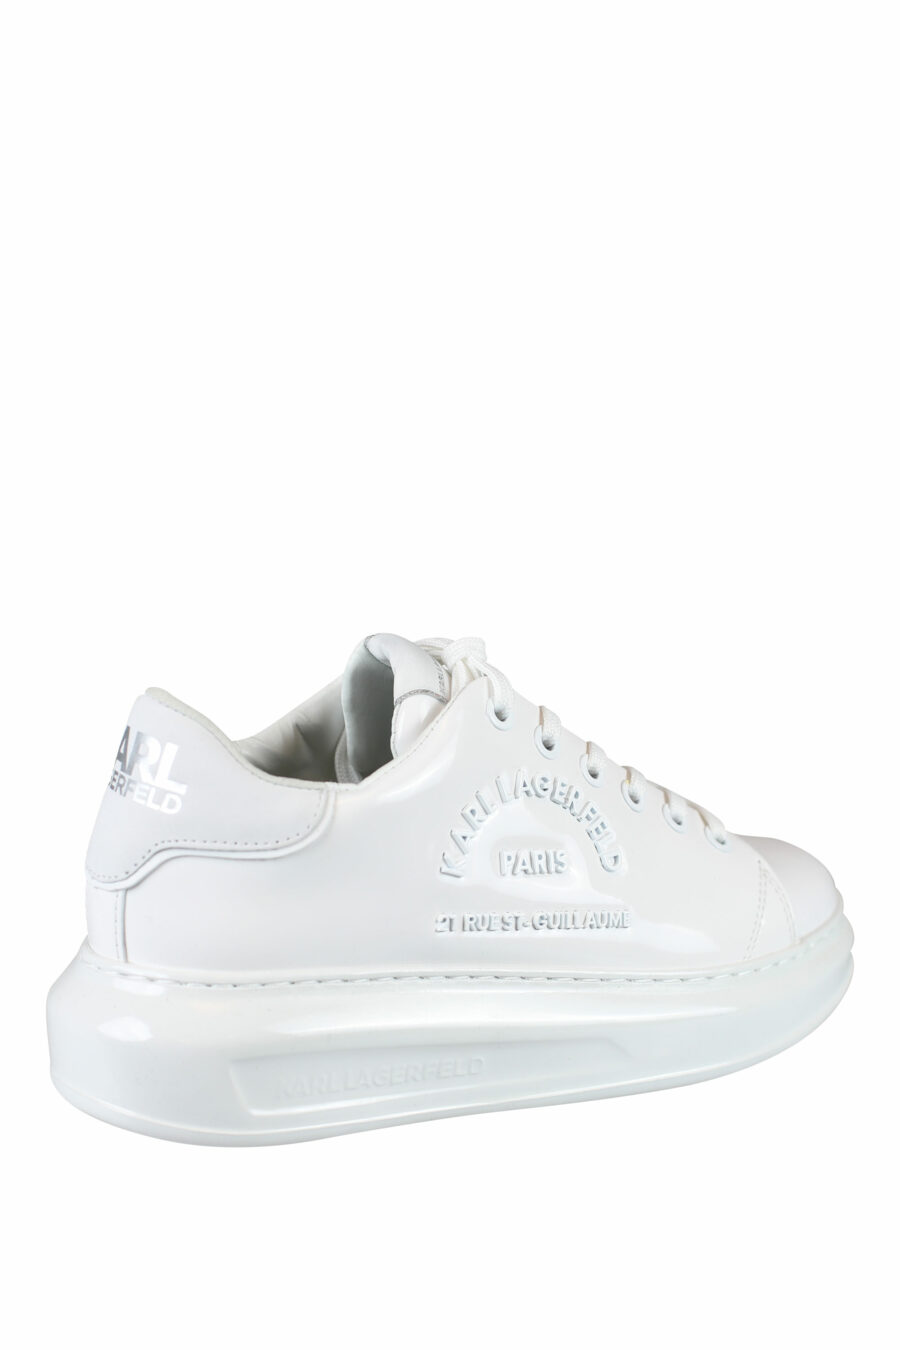 Zapatillas blancas brillantes con logo lettering "rue st guillaume" - IMG 0014 1